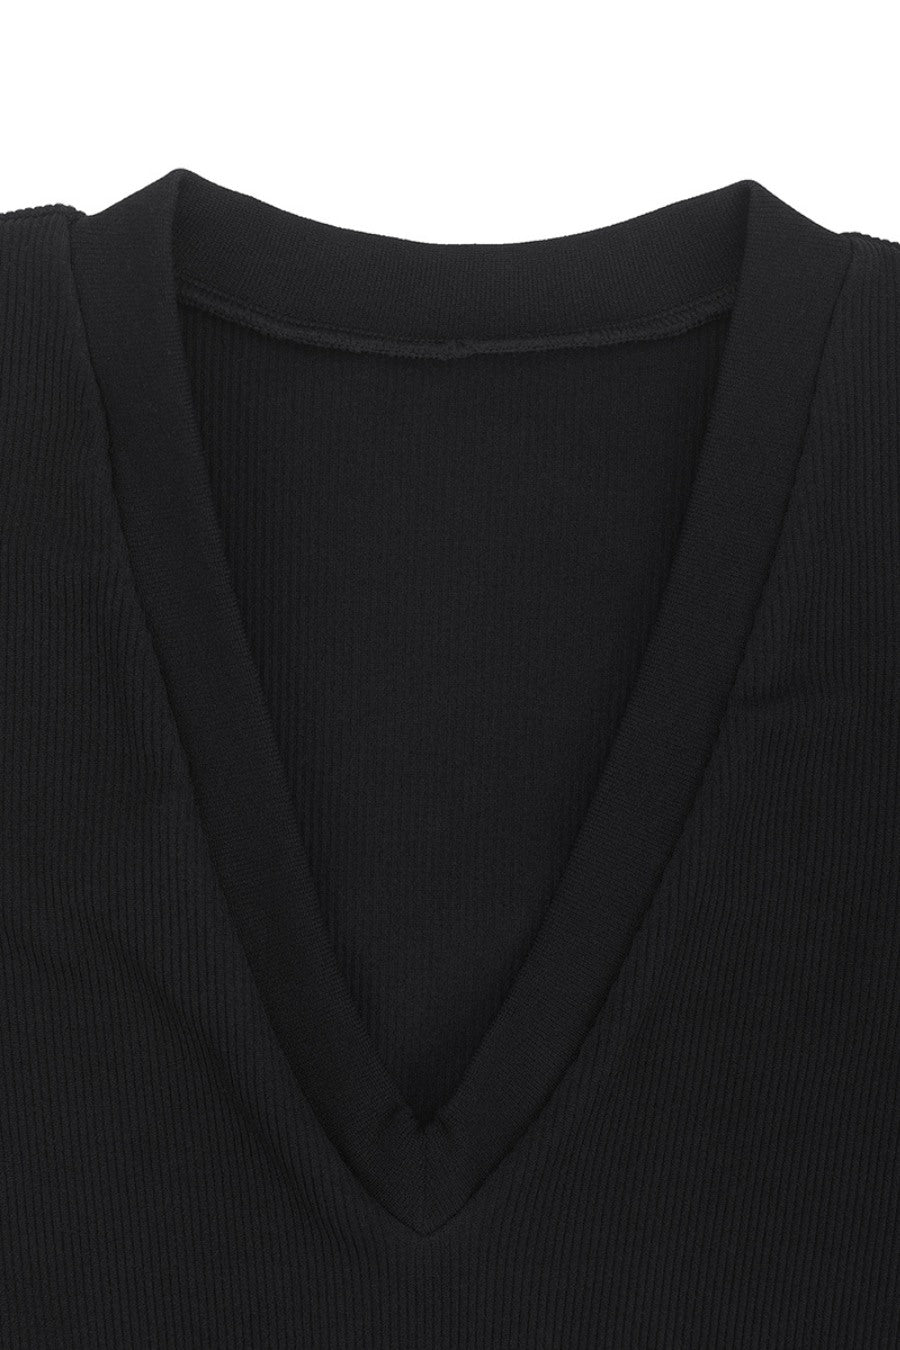 Blair Shaping Bodysuit - Black Contour Clothing